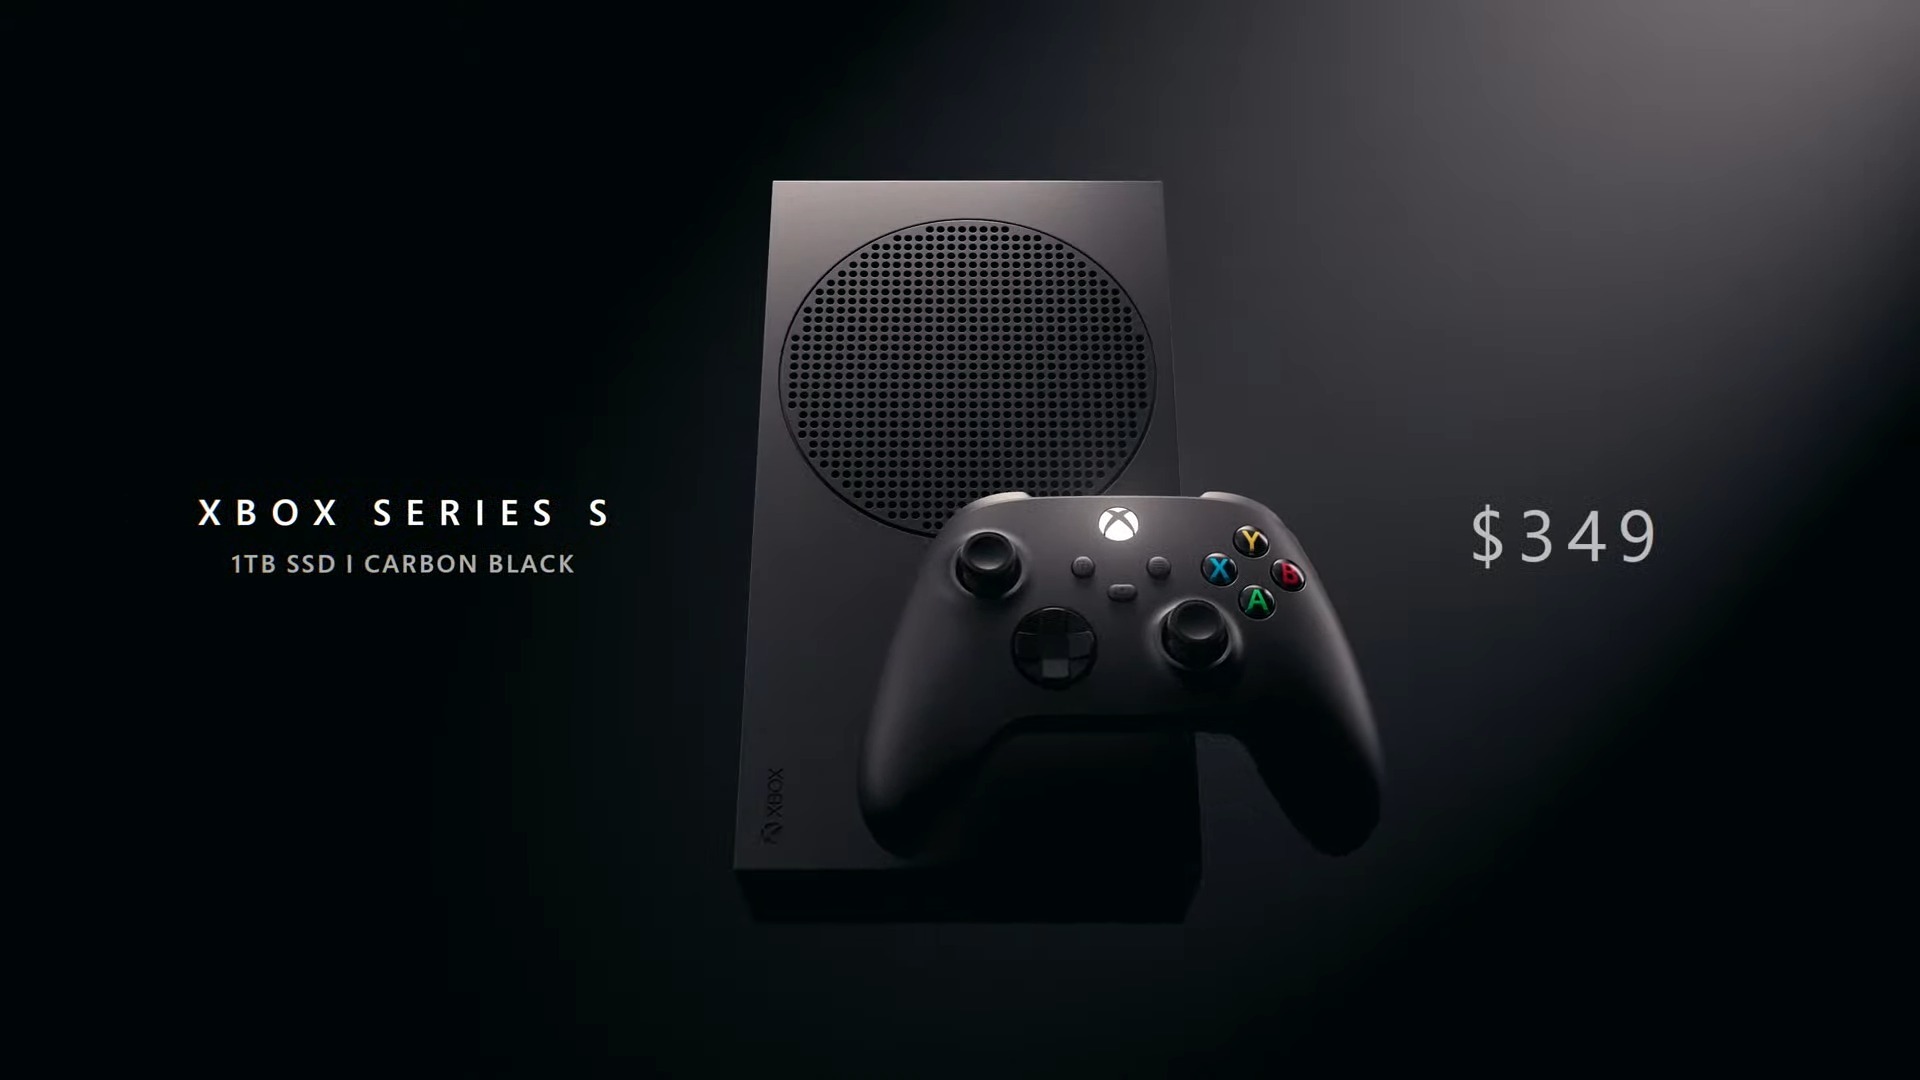 Black 1TB Xbox Series S